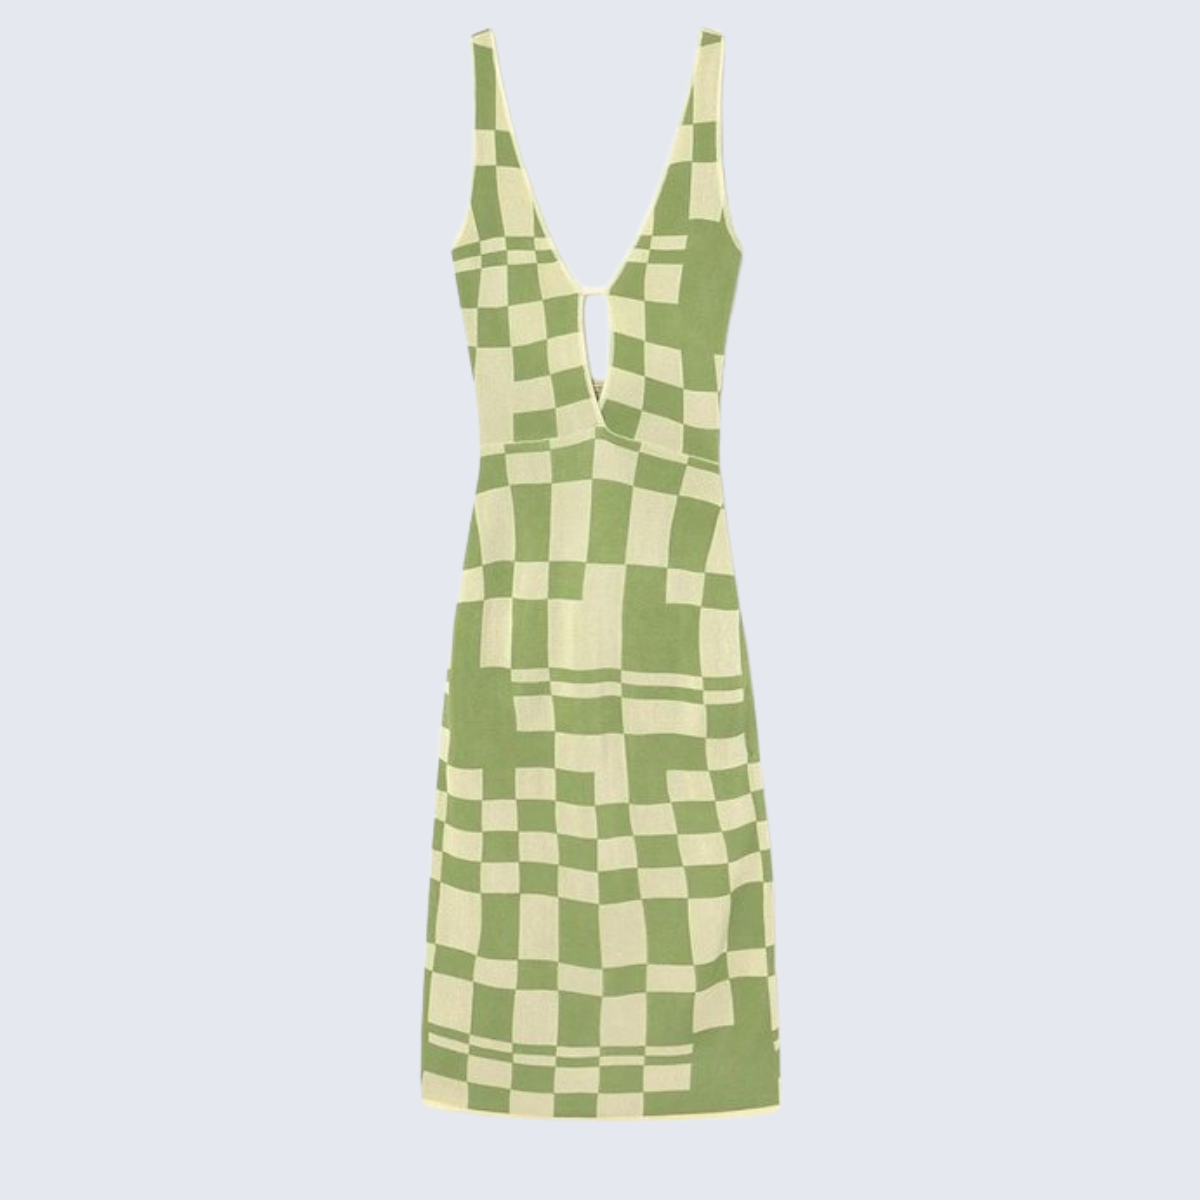 Green and White Checkerboard Knit Midi Dress